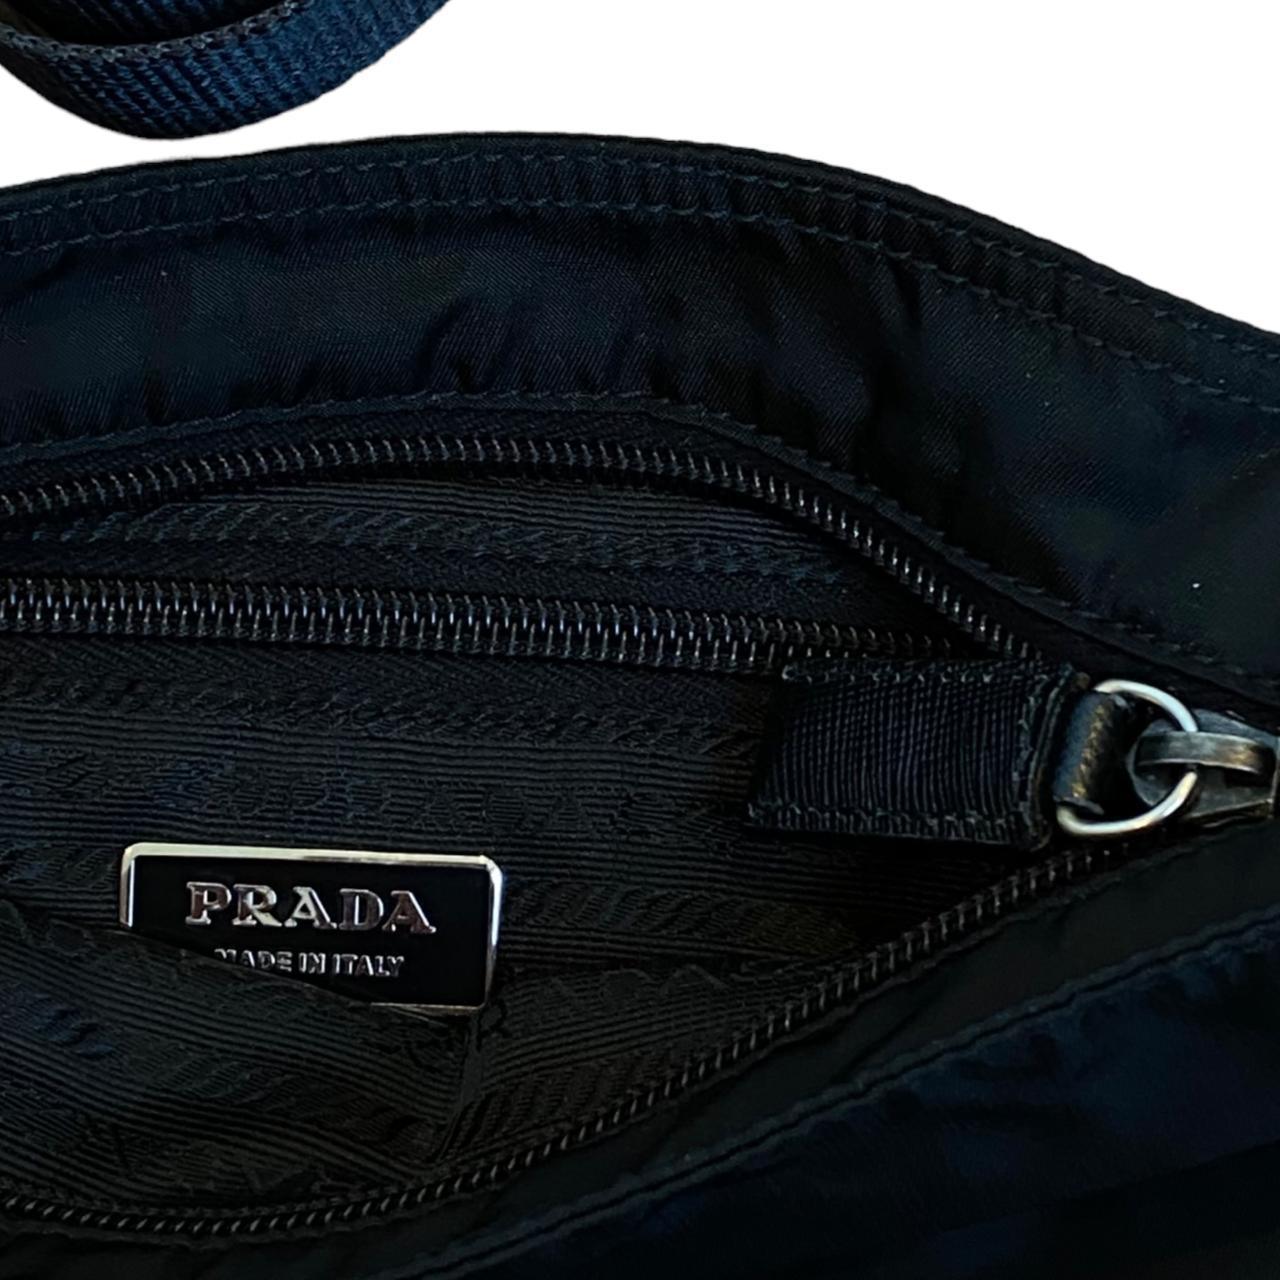 Authentic Prada nylon Black Shoulder Cross Body Bag - Known Source